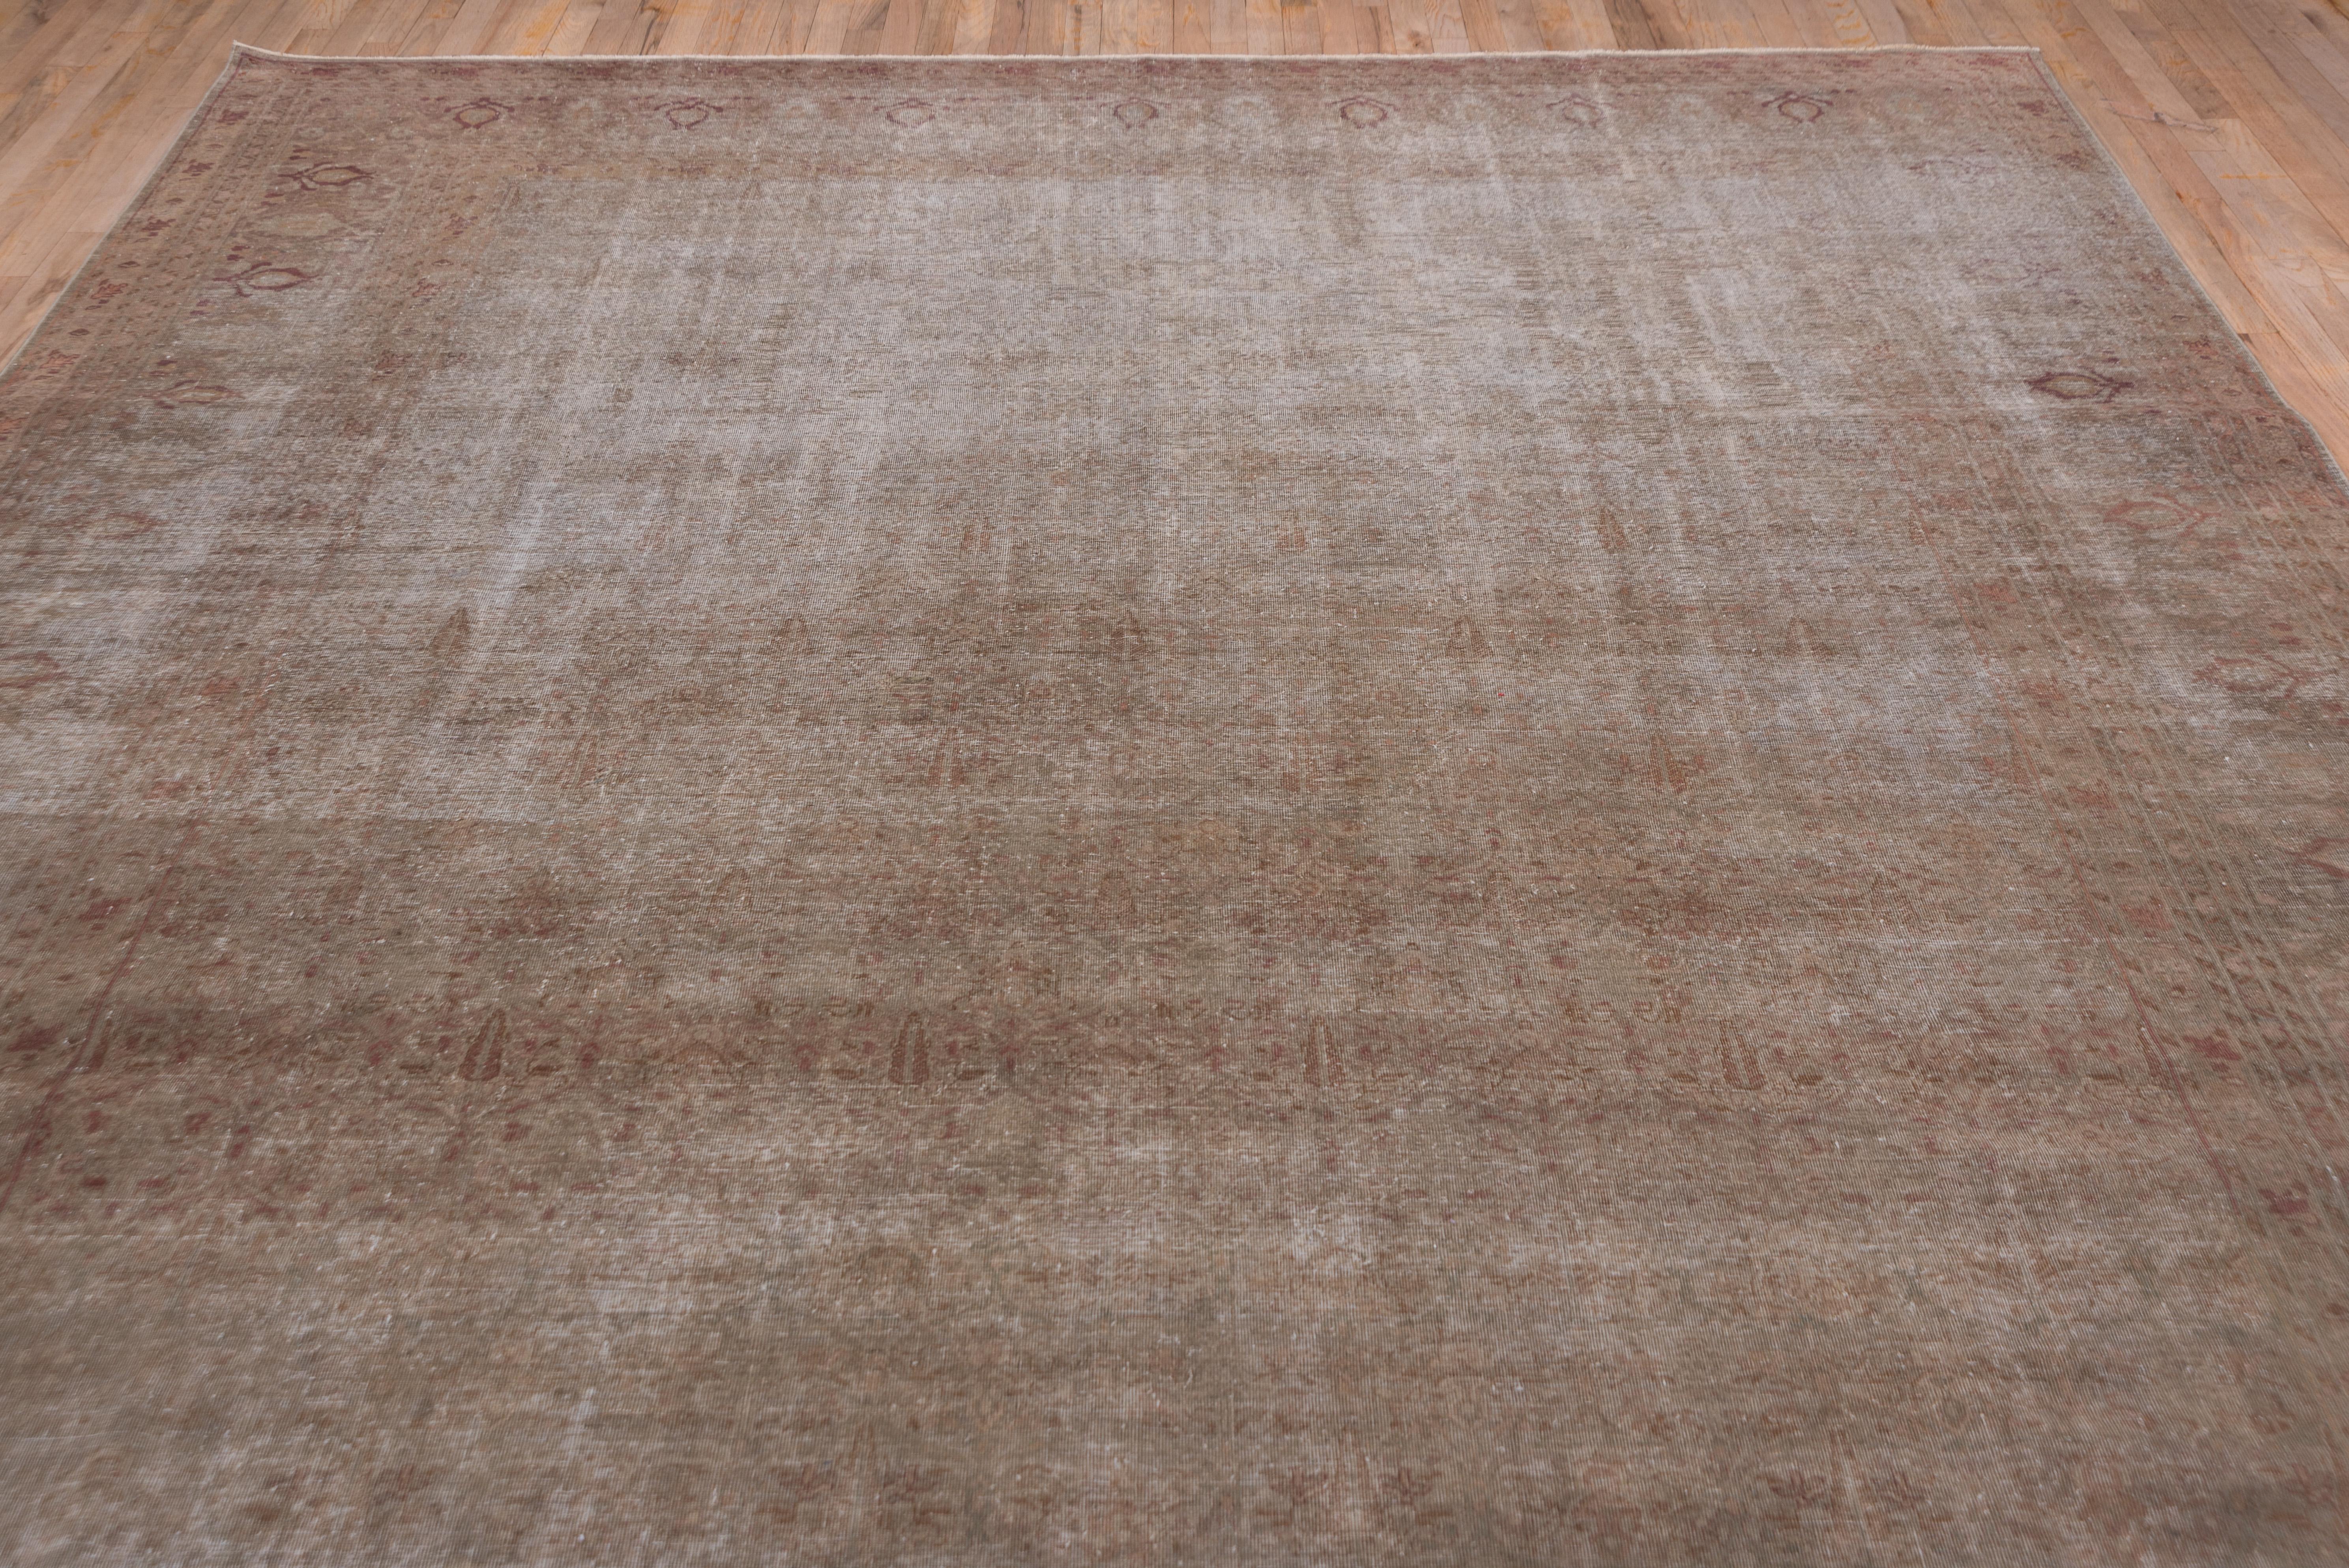 Antique Distressed Indian Amritzar Carpet, circa 1910s, Mauve Field 2